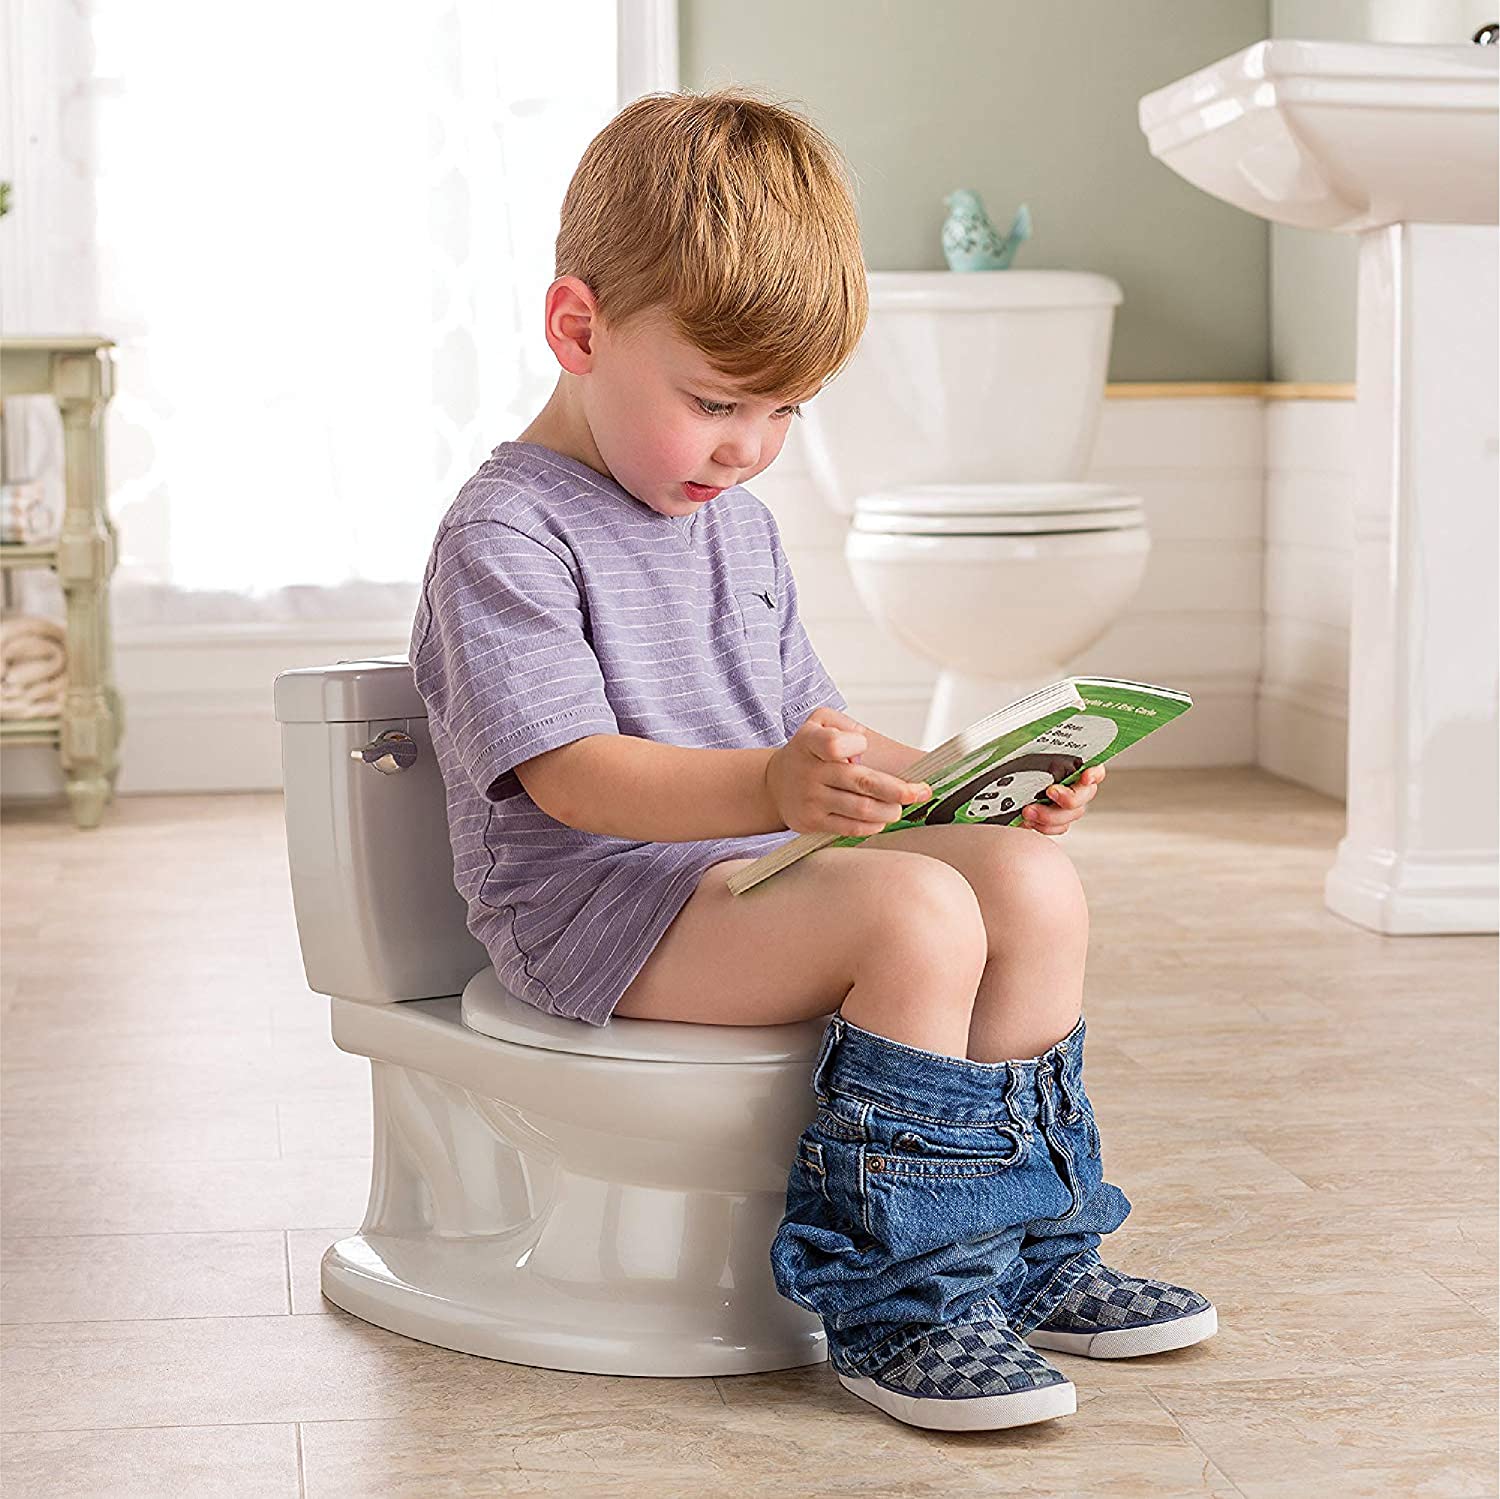 5. Summer Infant Realistic Potty Training Toilet